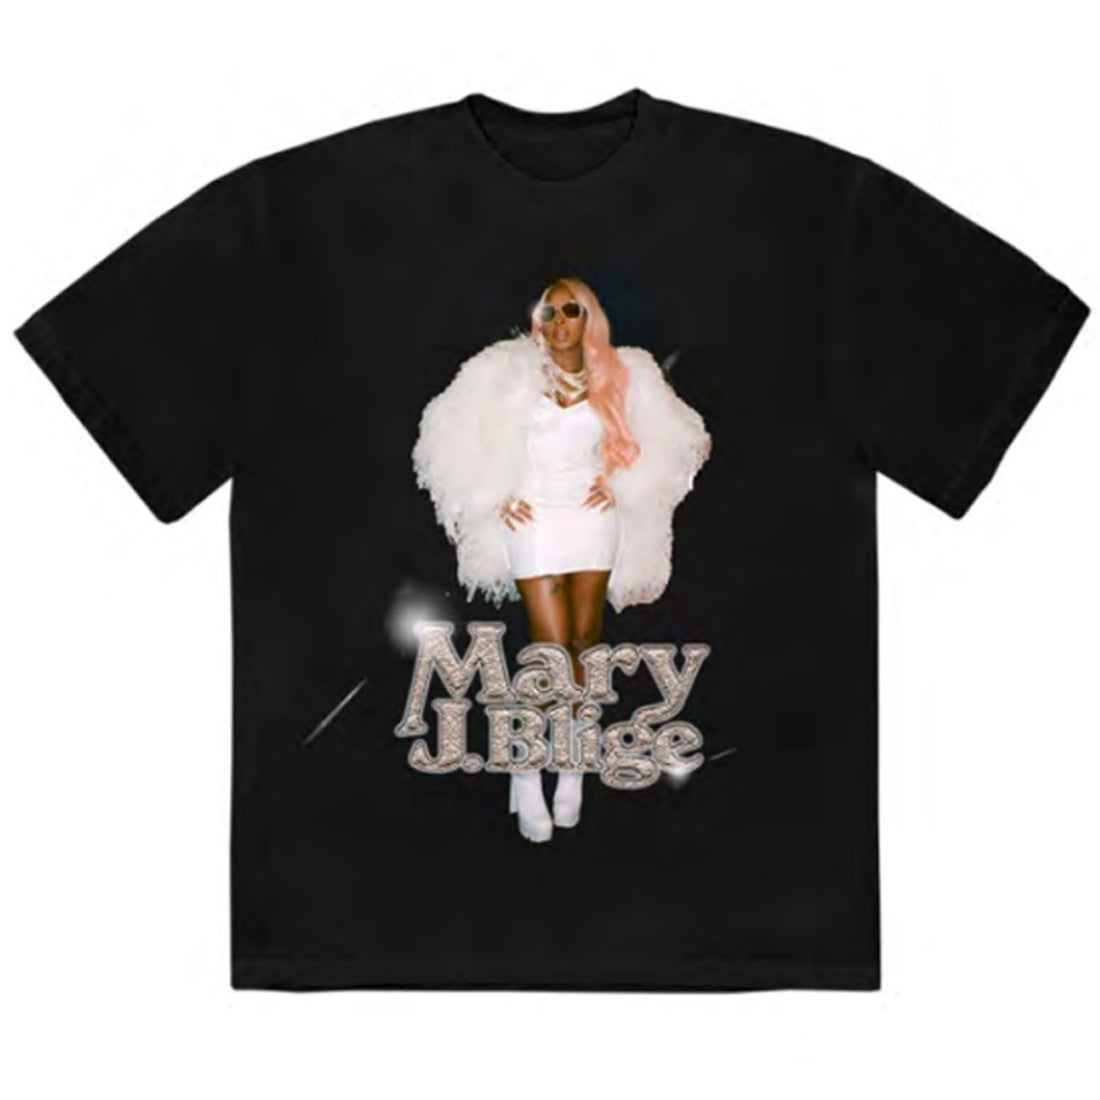 Mary J Blige Photo T-Shirt